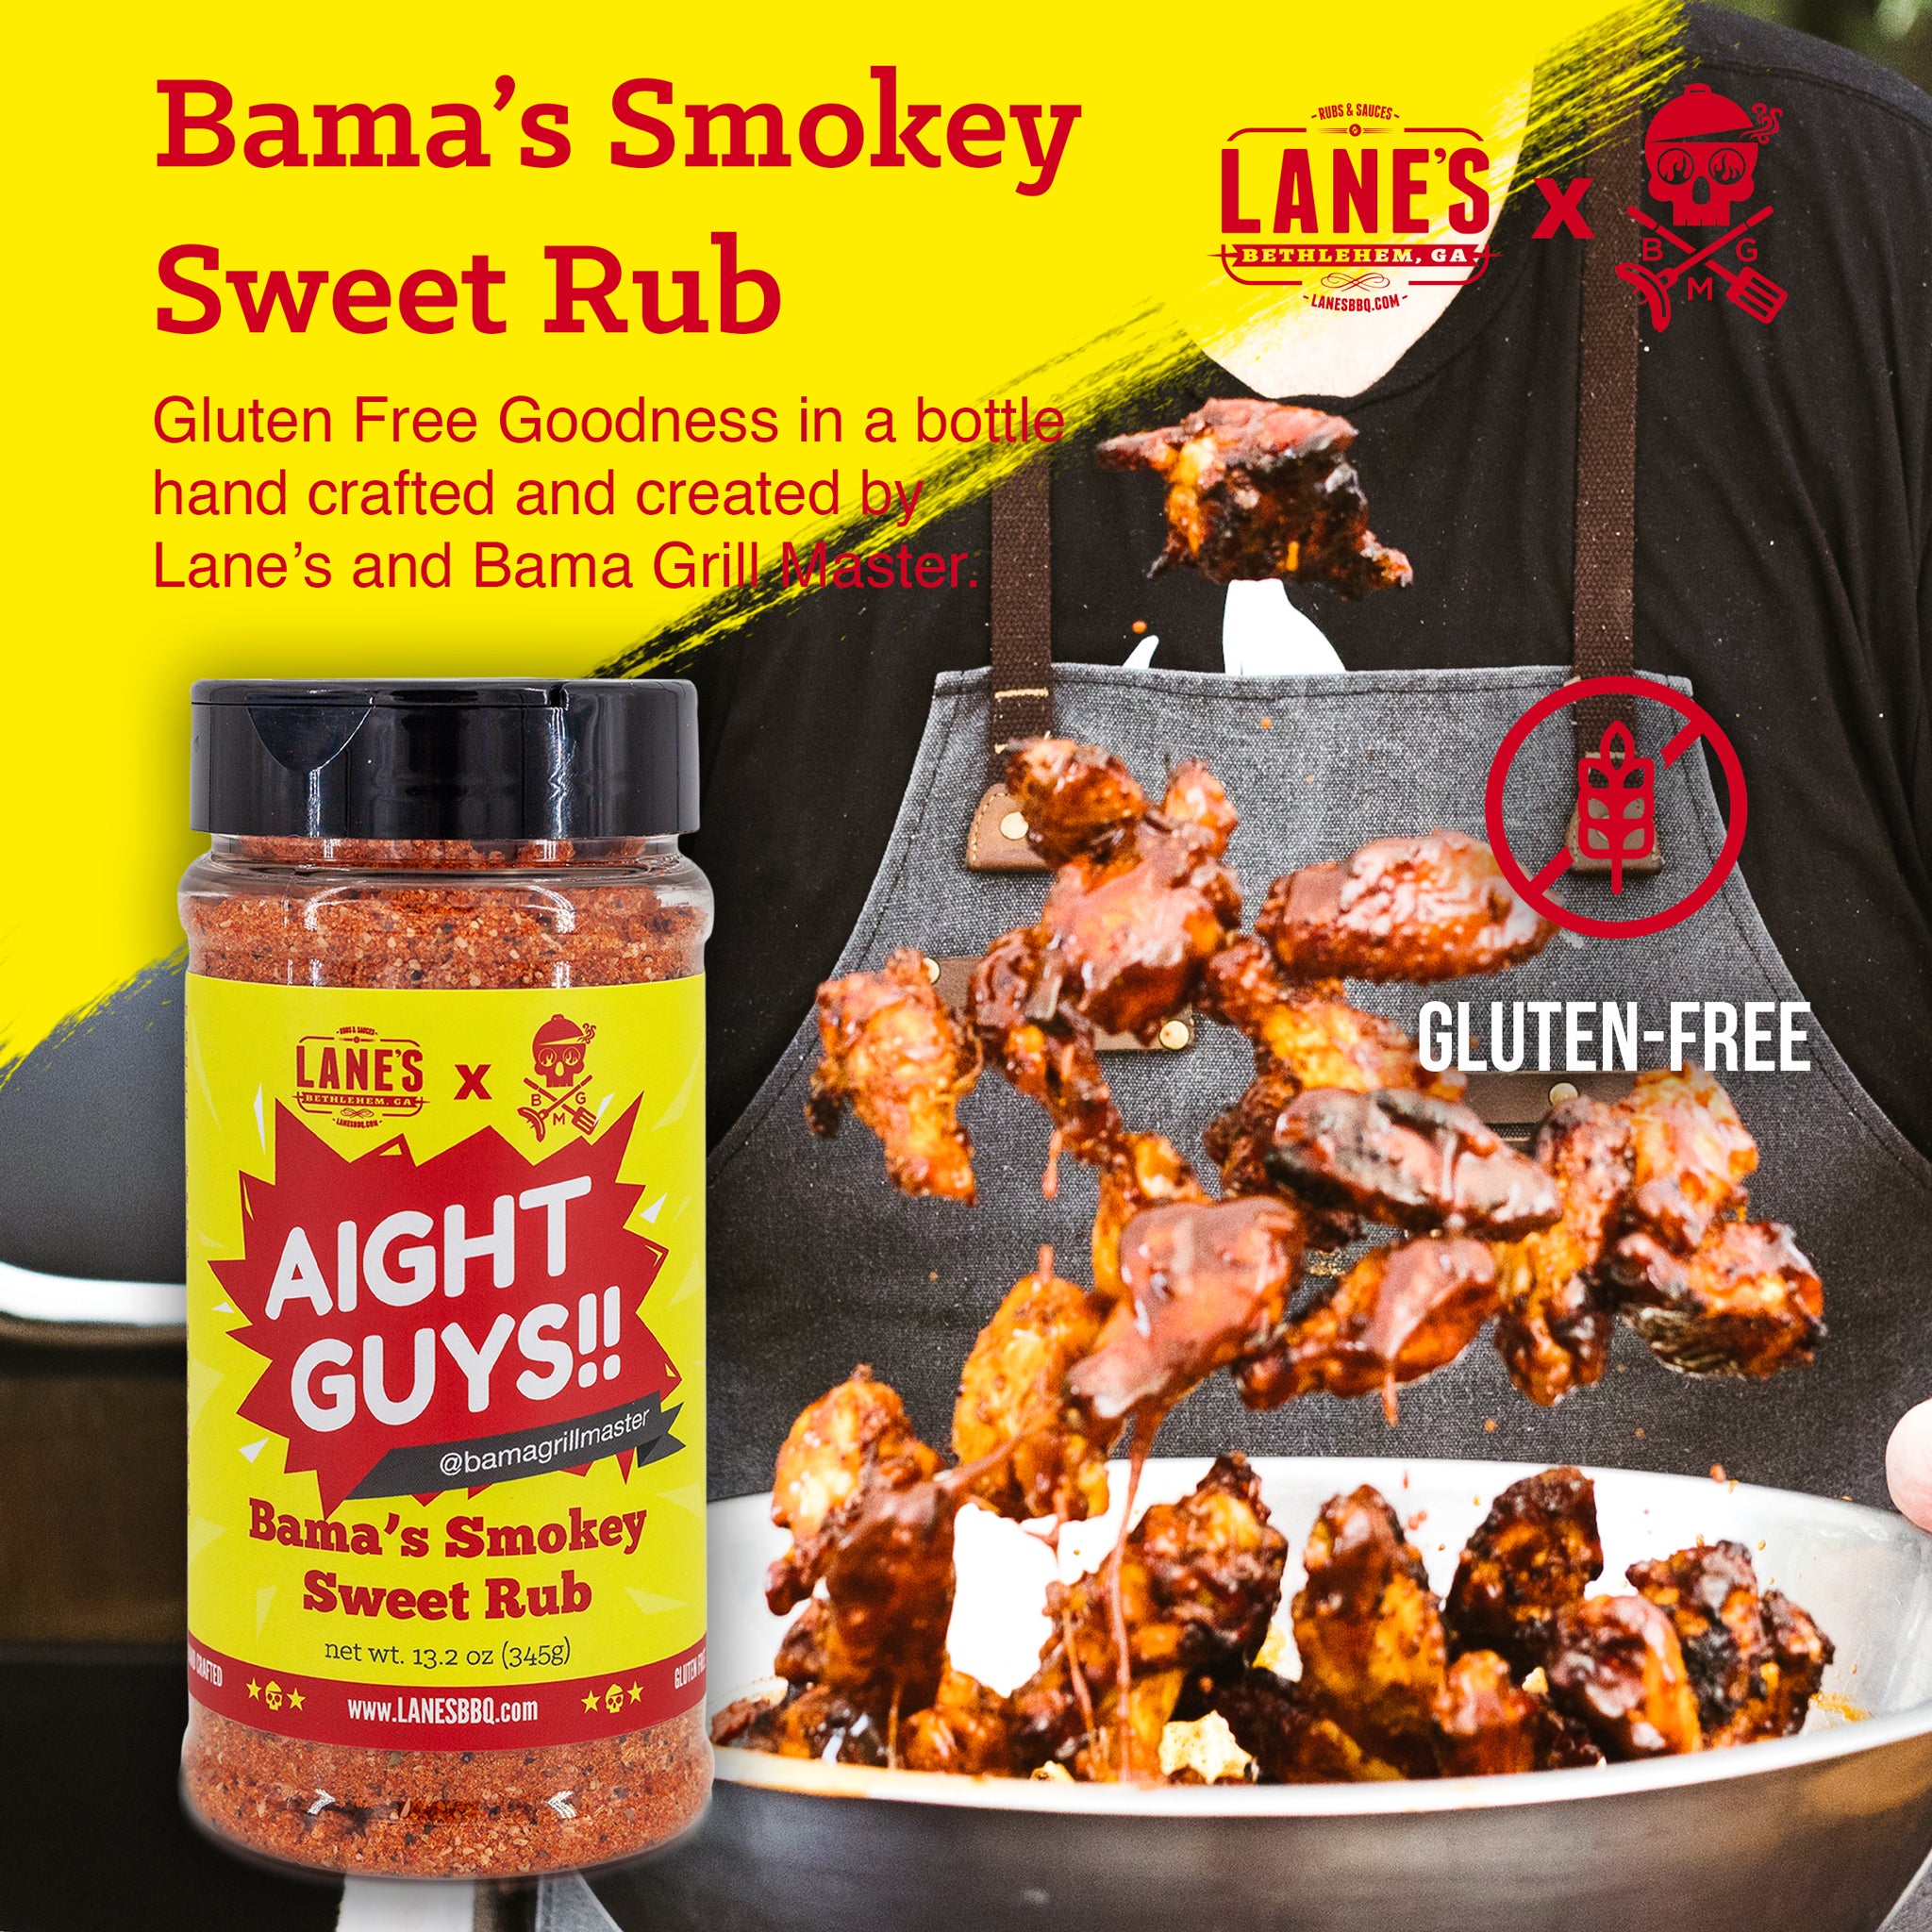 Bama's Smokey Sweet Rub